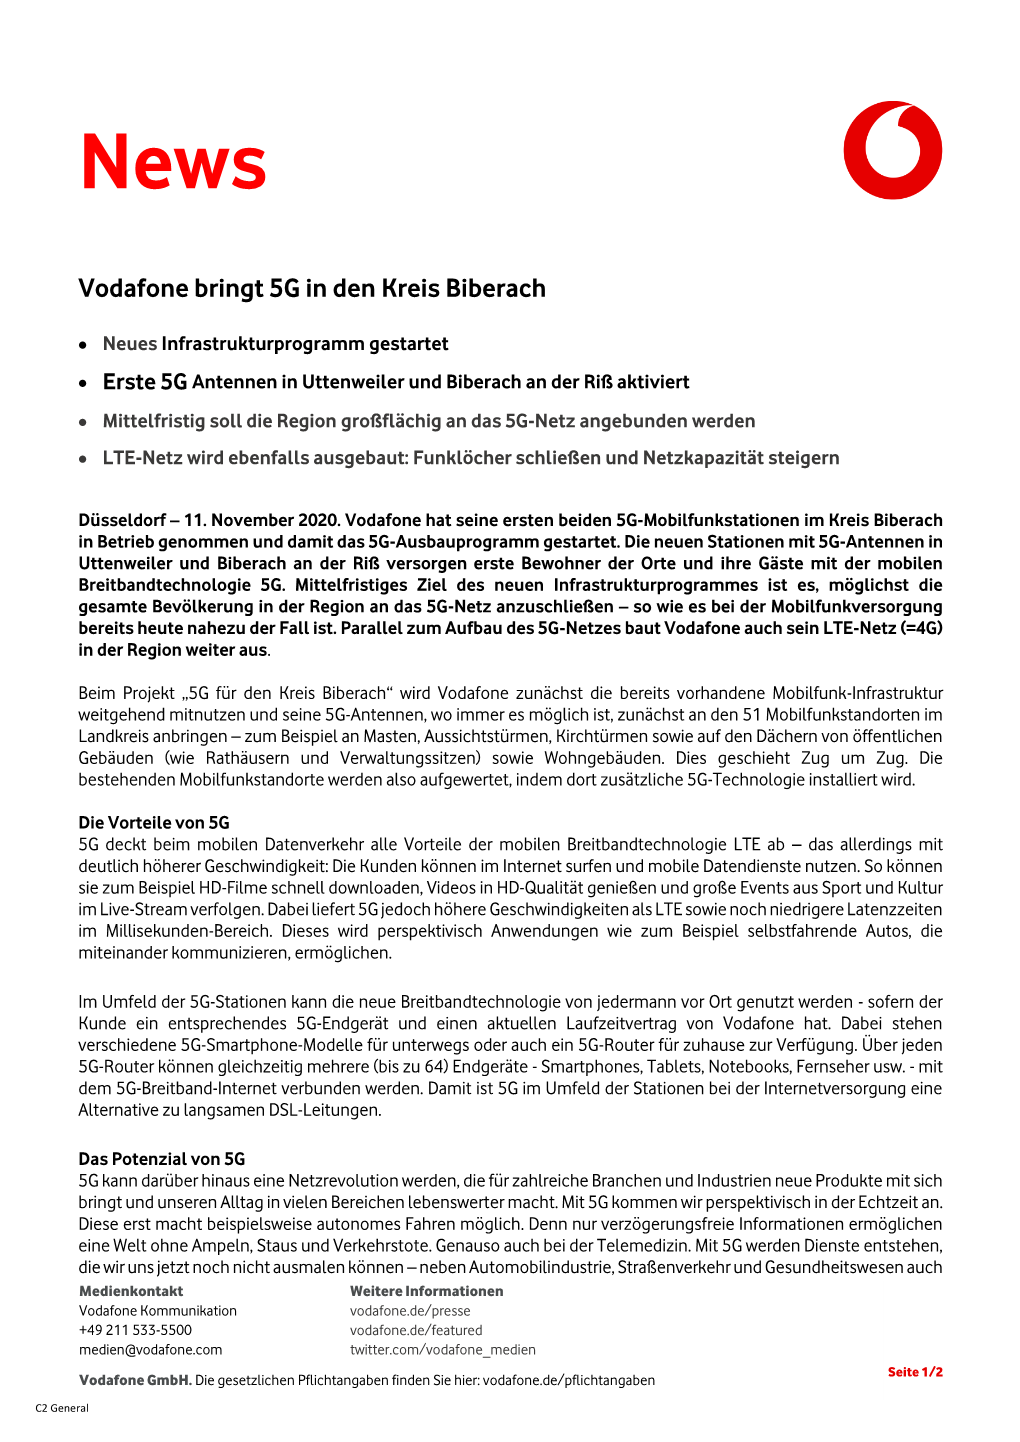 Vodafone Bringt 5G in Den Kreis Biberach